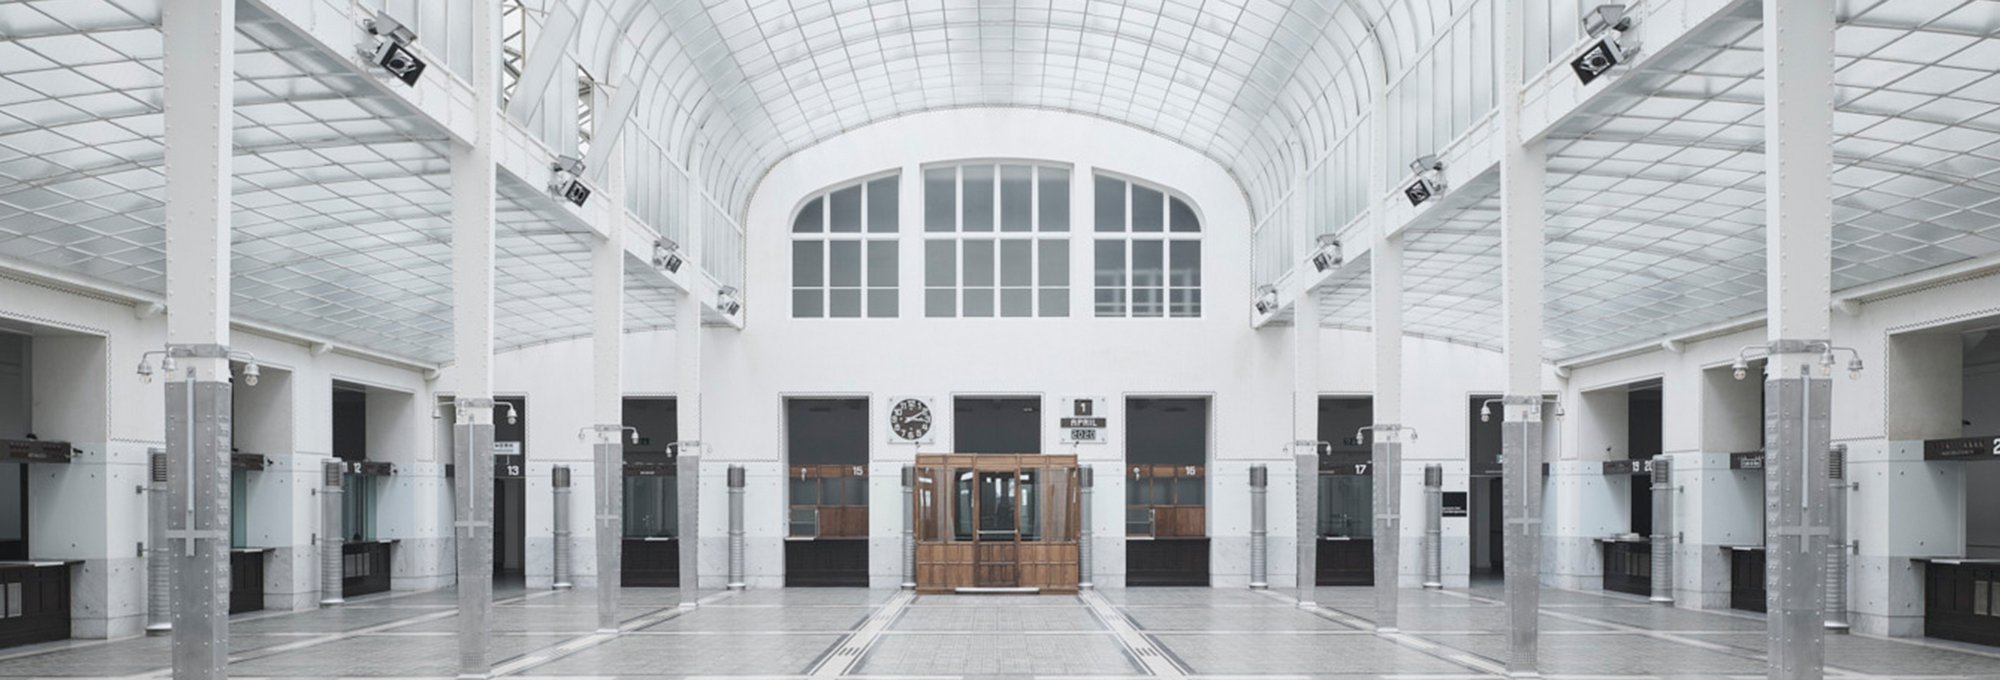 Otto Wagner Postsparkasse - Große Kassenhalle